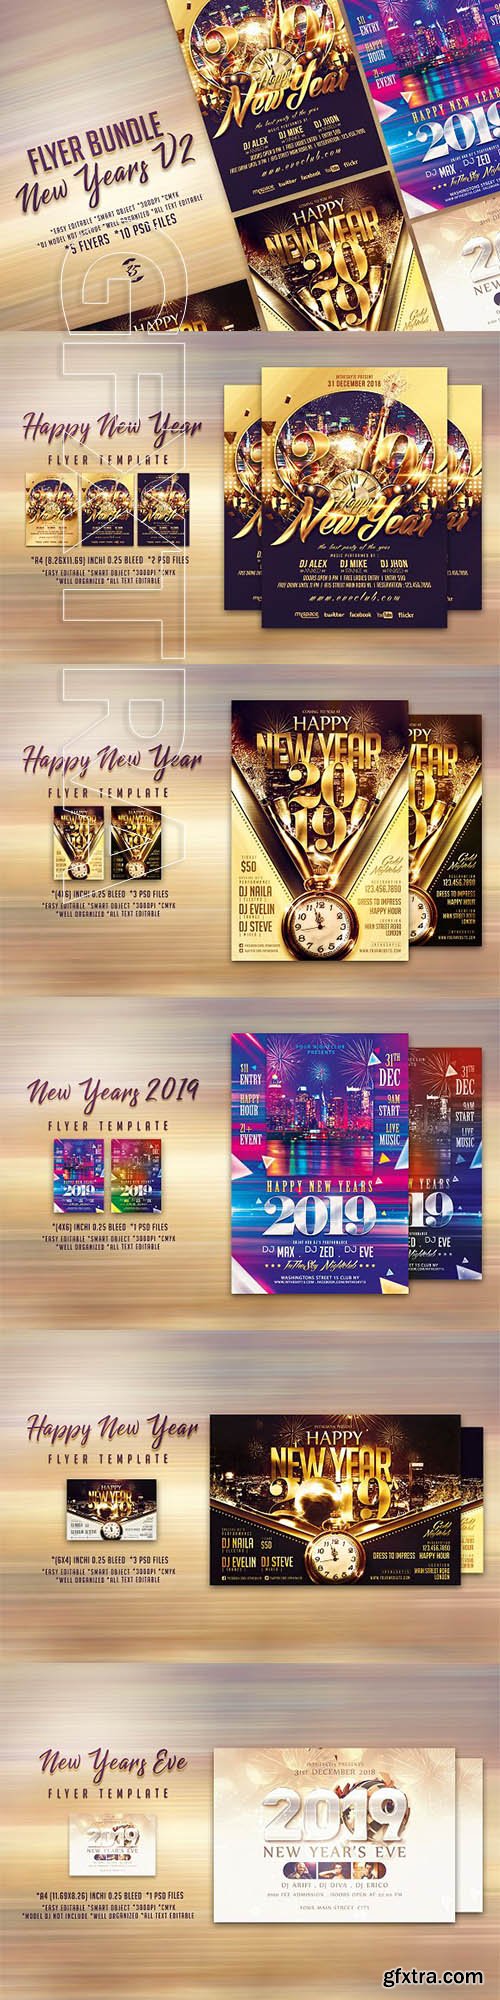 CreativeMarket - New Years Flyer Bundle V2 3286191